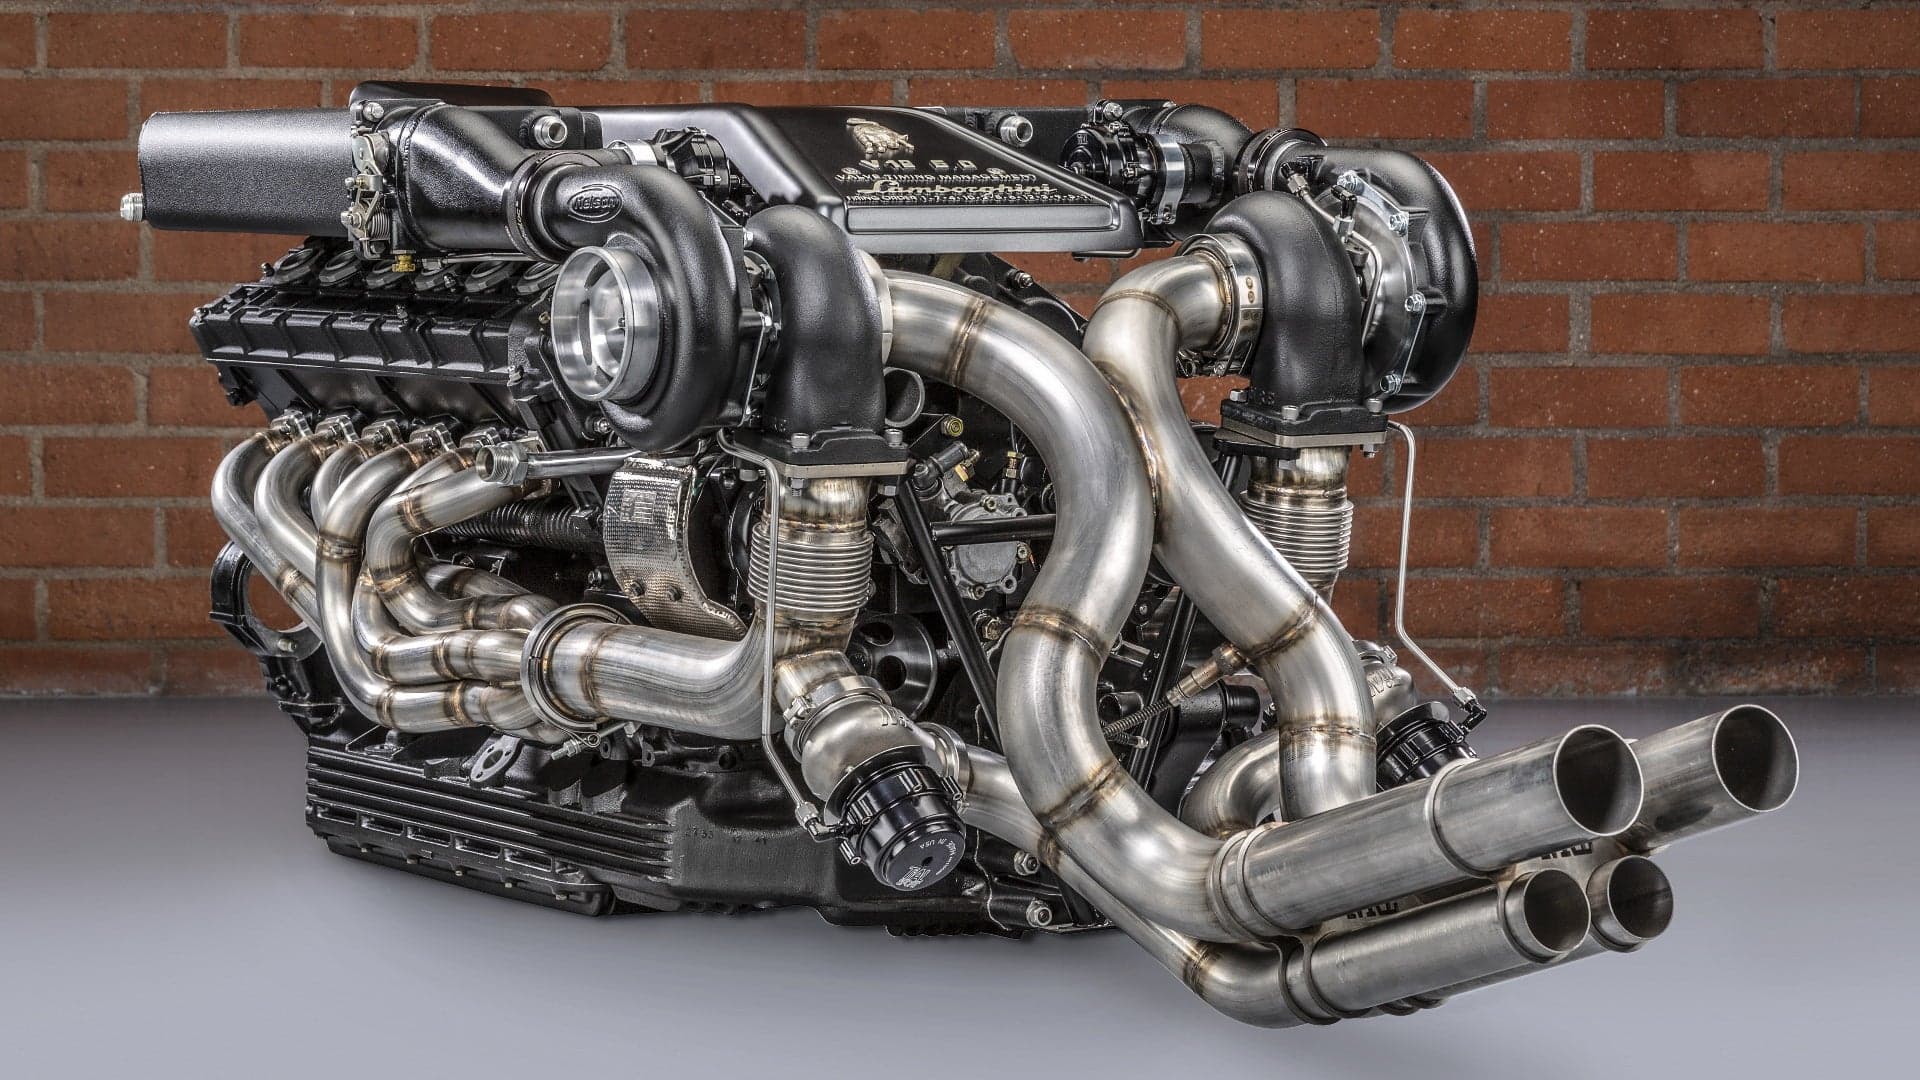 Nelson Racing Engines’ Twin-Turbo Lamborghini V12 Is a Beautiful Way to Make 1,500 HP